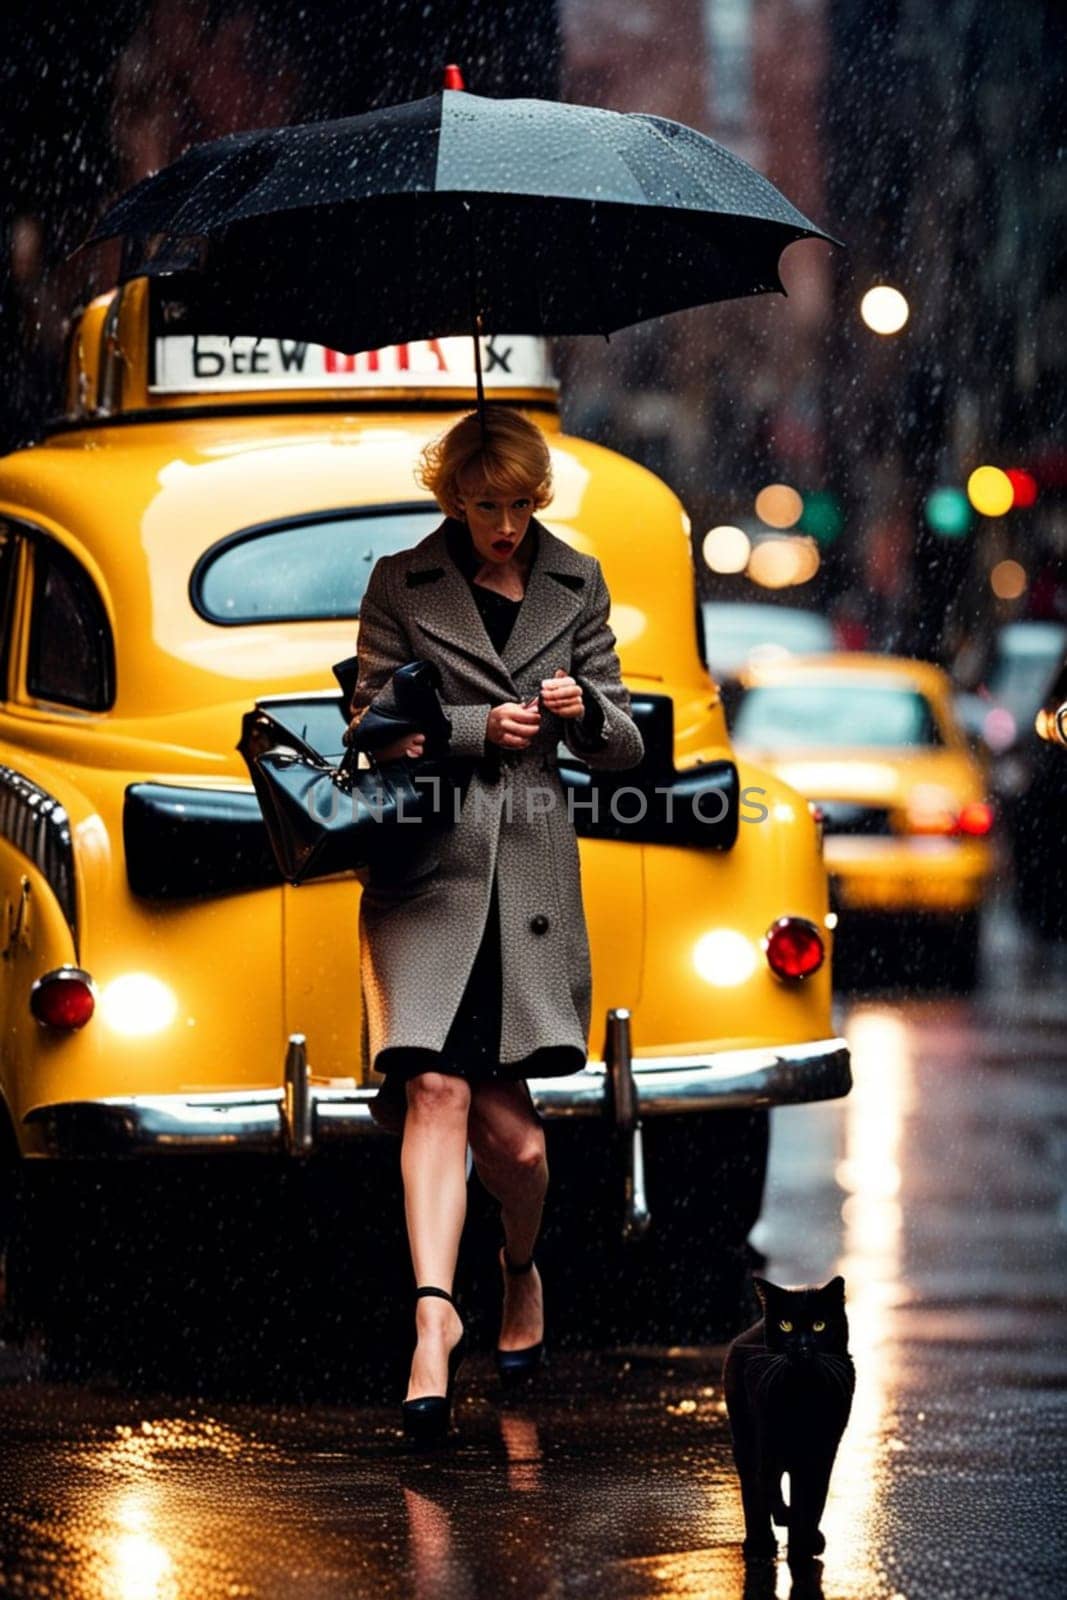 Vibrant curvy classy lady, wear blue winter coat high heels,rain, walk New york city taxis, big cat by verbano